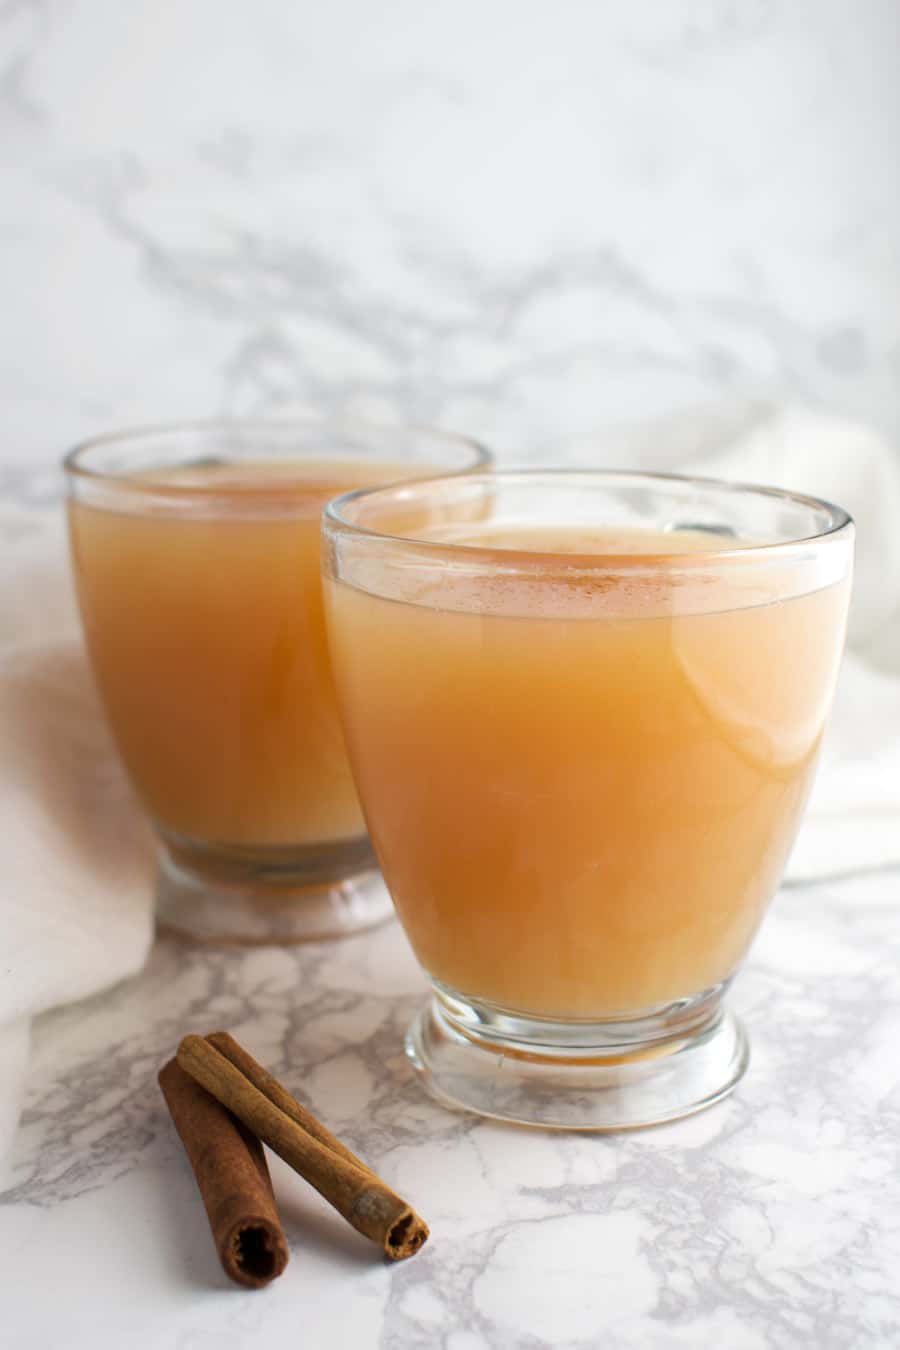 Spiced Apple Cider recipe from acleanplate.com #aip #autoimmuneprotocol #paleo